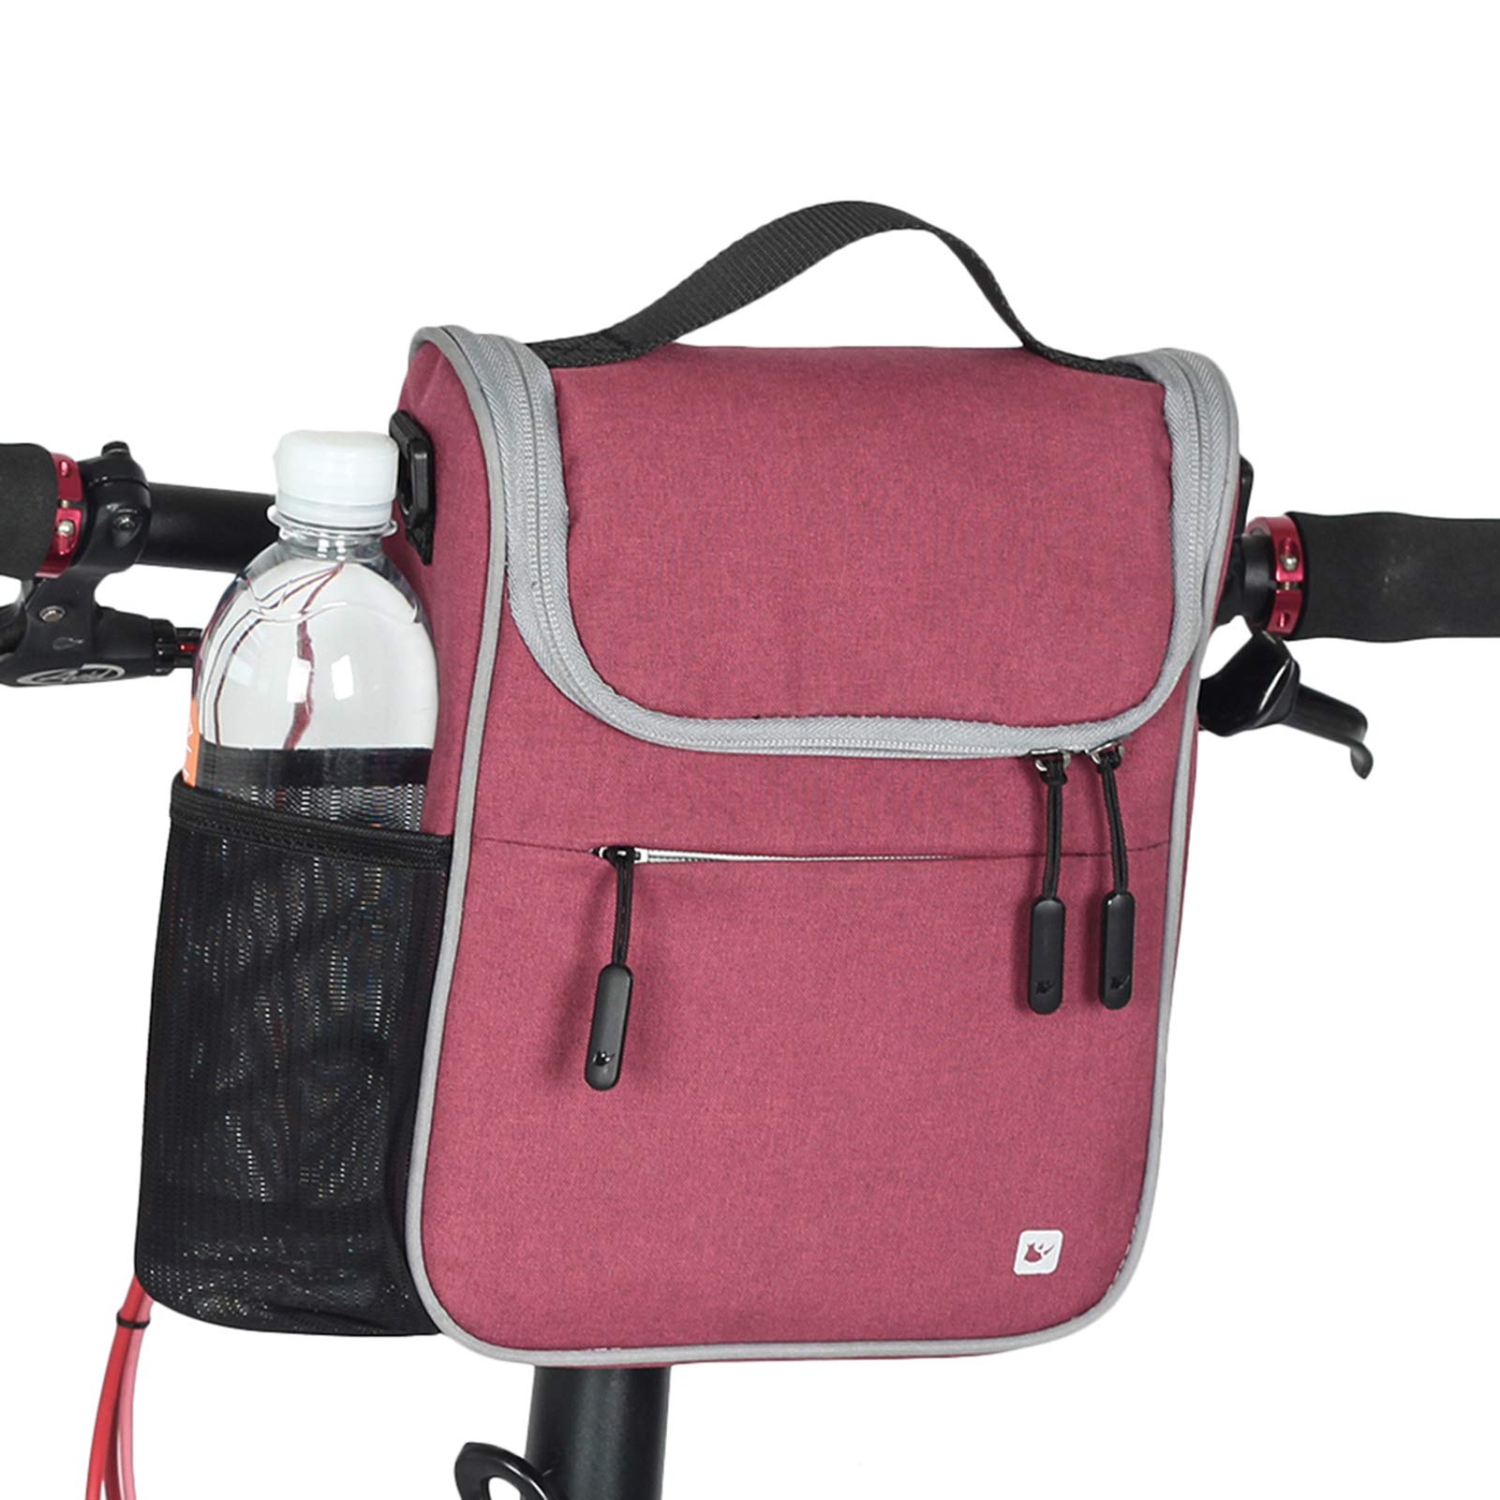 Bike Basket Bicycle Handlebar Bag Front Frame Top Tube Storage Bag Mini Shoulder/Hand Bag with Rain Cover